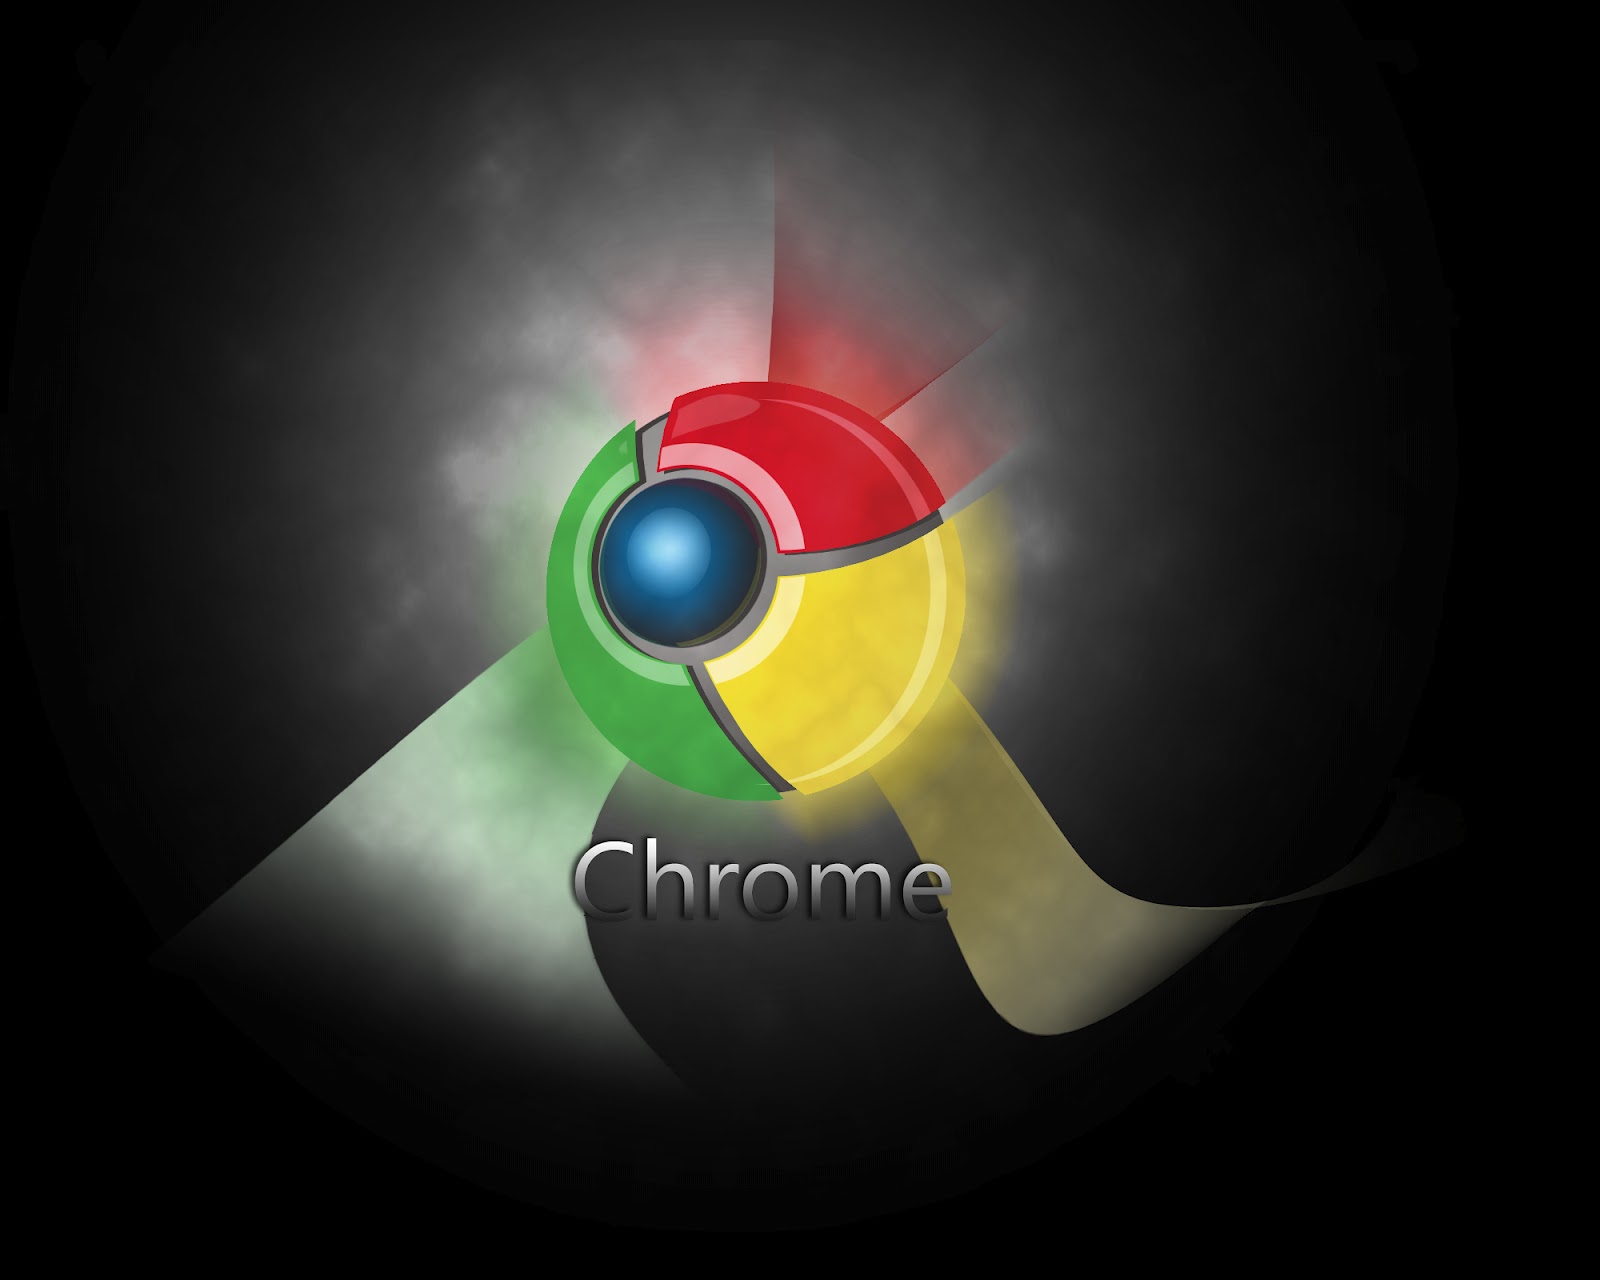 google chrome backgrounds